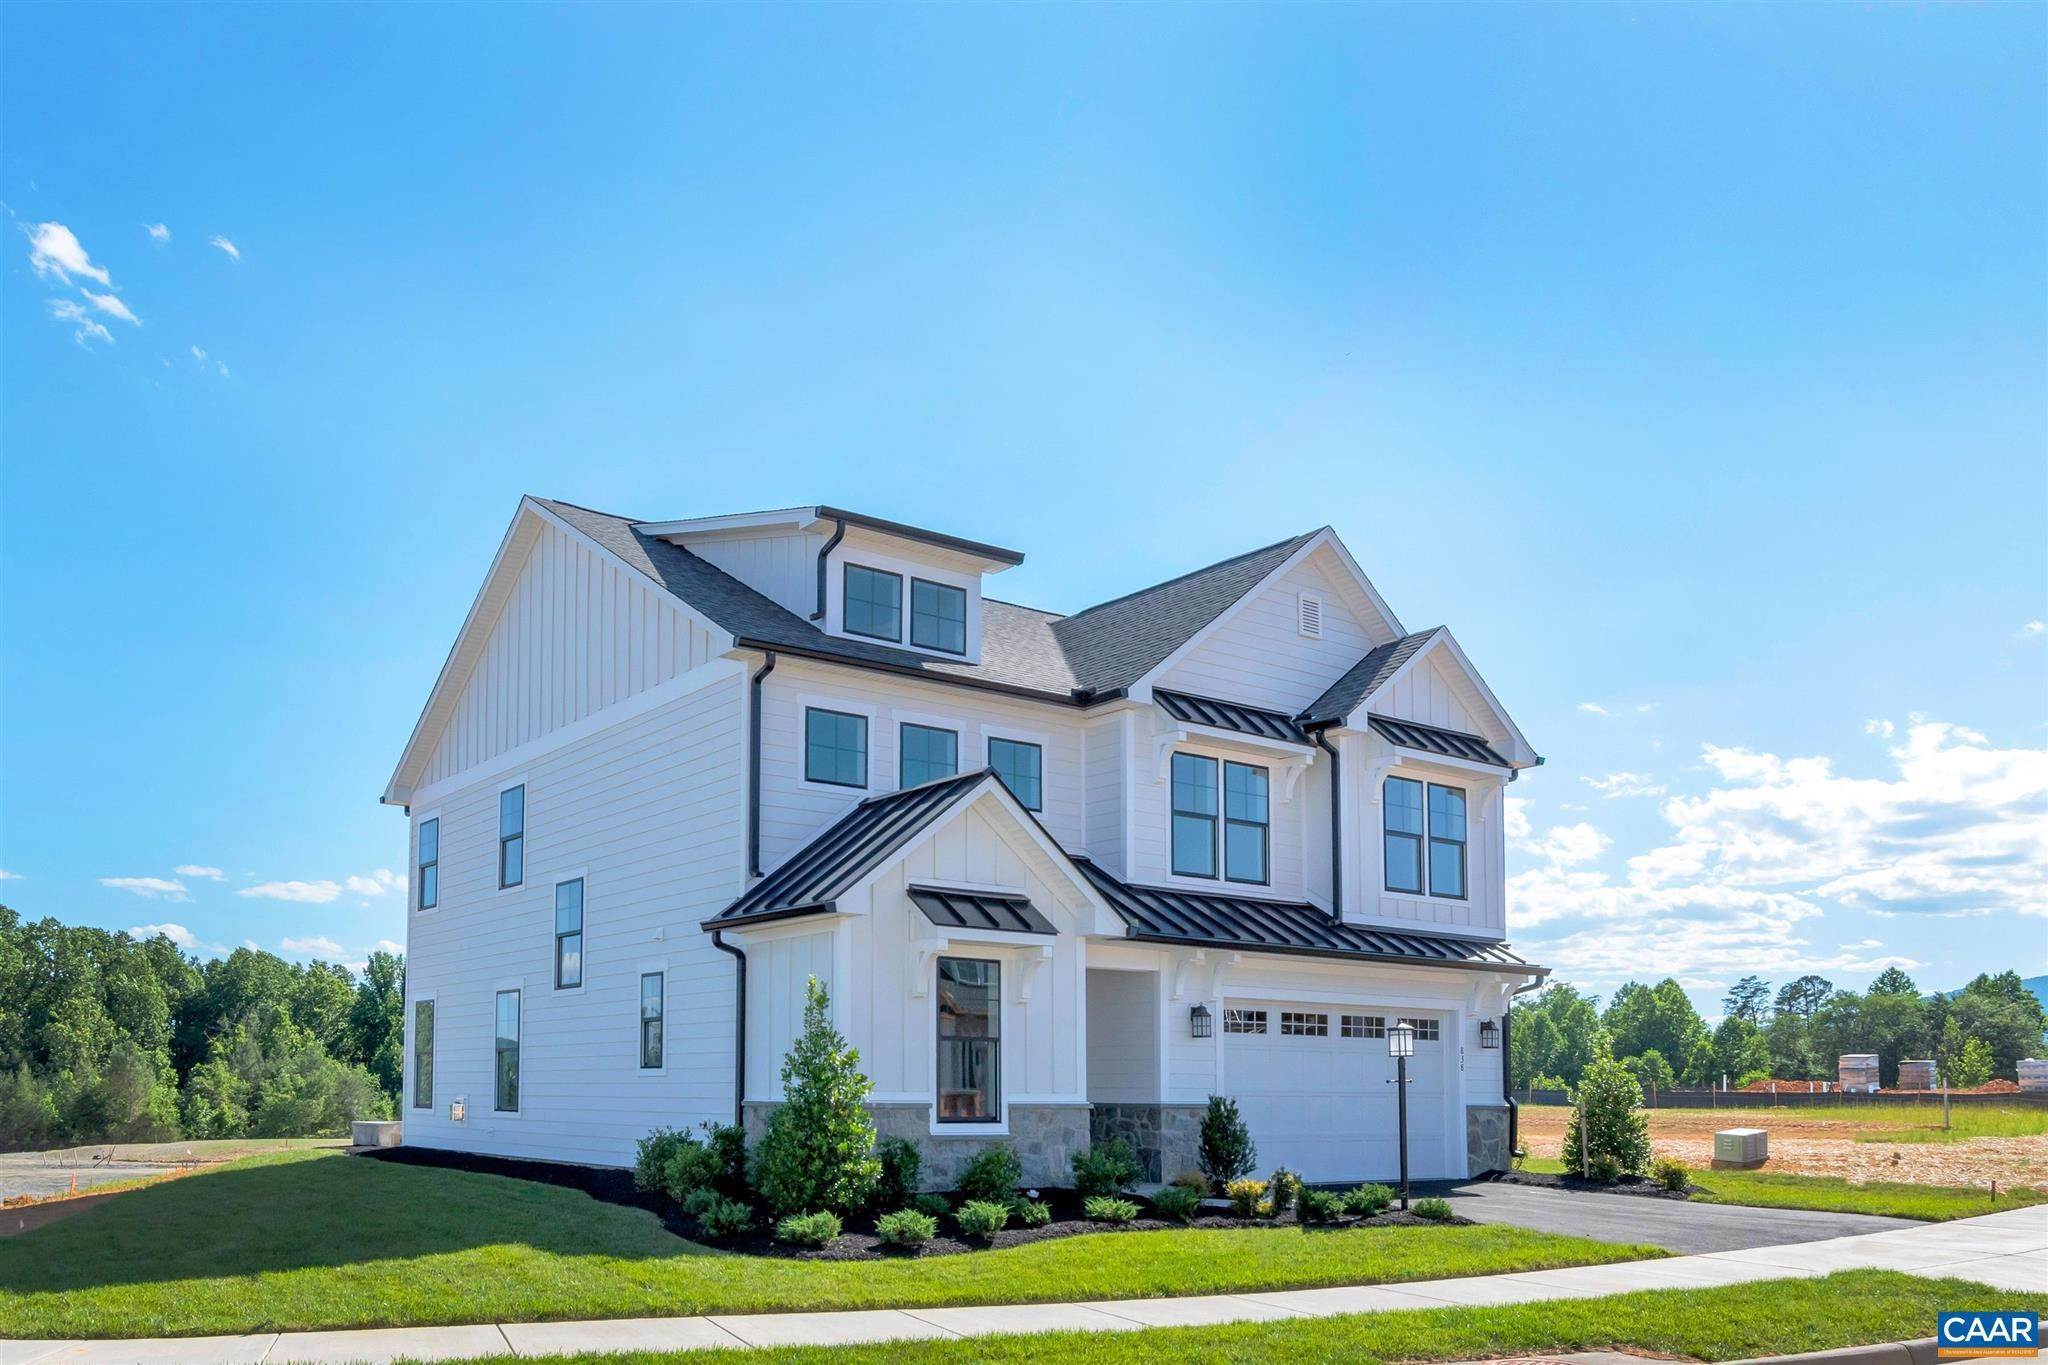 Single Family Homes for Sale at 159 HEATHFIELD Lane Crozet, Virginia 22932 United States